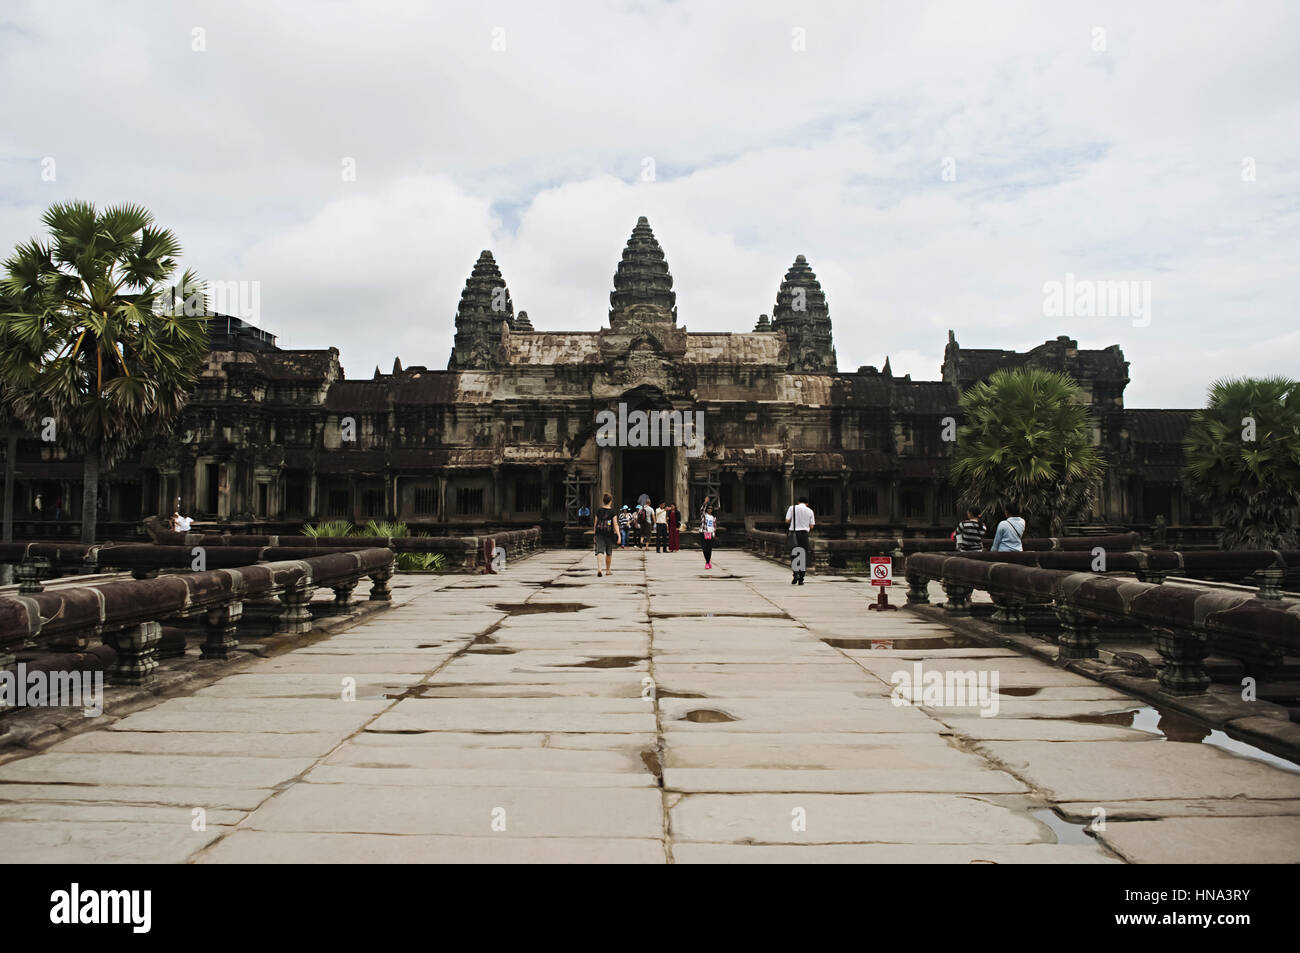 Eingang zum Angkor Wat, Siem Reap, Kambodscha. Größte religiöse Bauwerk der Welt 162,6 Hektar. UNESCO-Welterbe Stockfoto